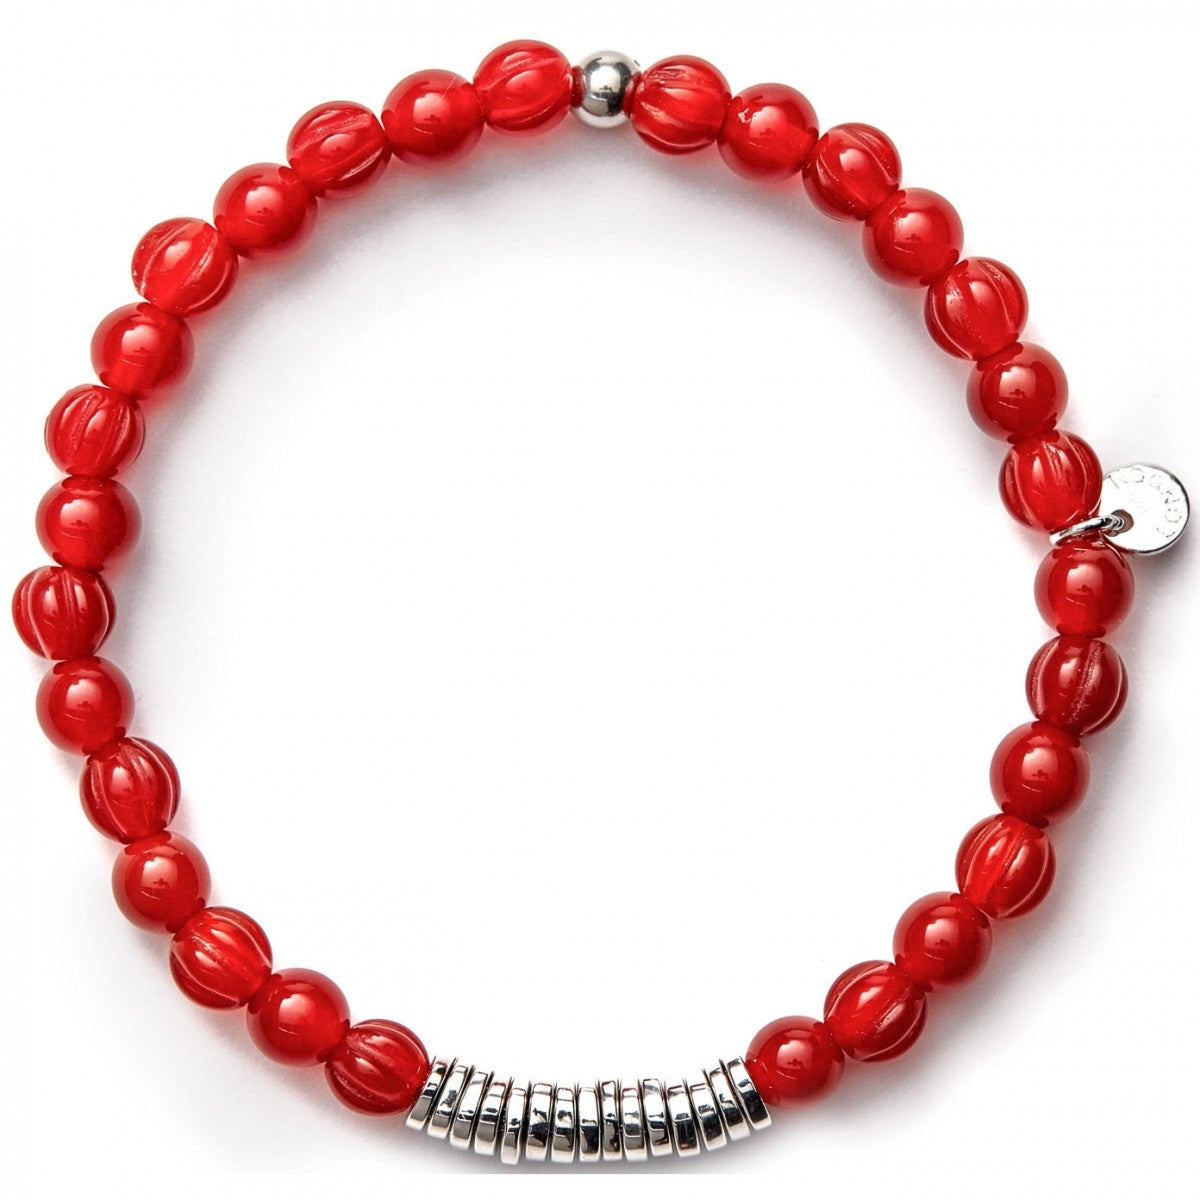 Tateossian Men's Red Carnelian Bead Bracelet with Silver Spacer Discs